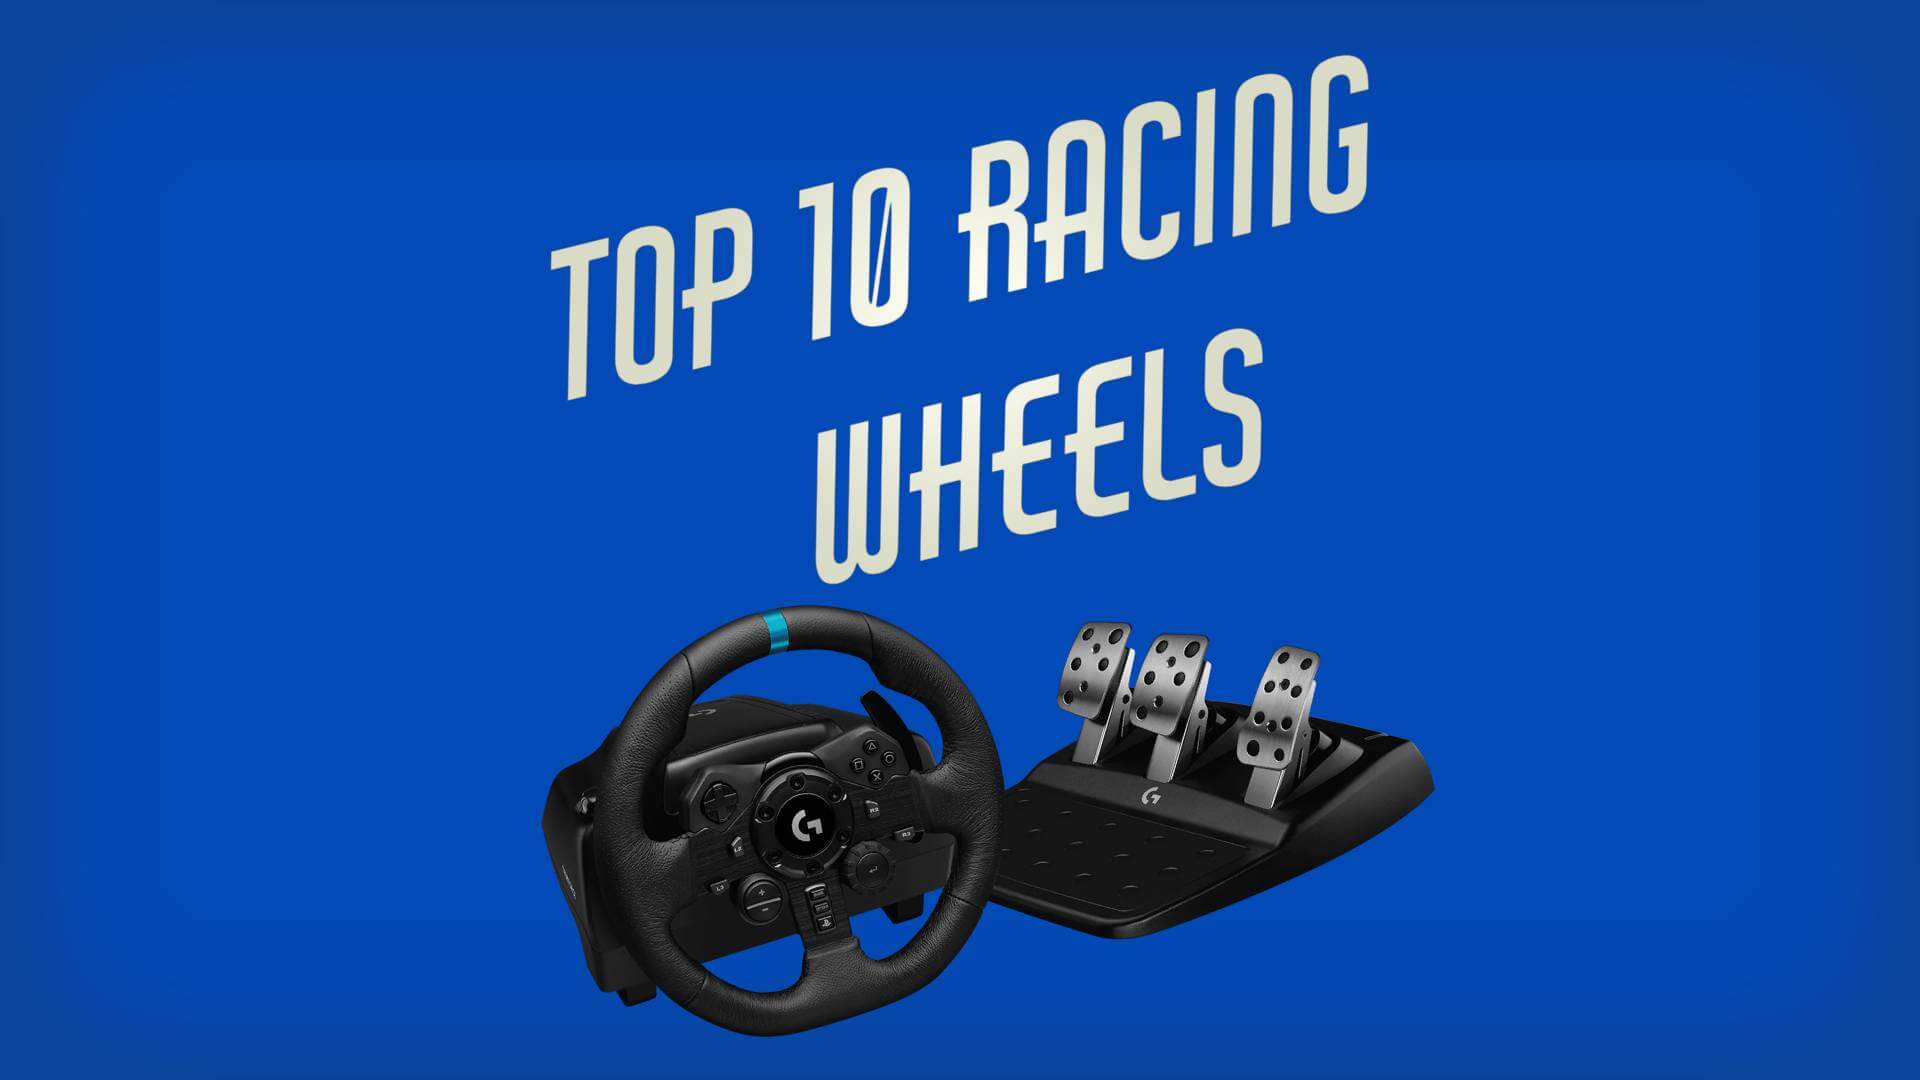 List of Top 10 Racing Wheels